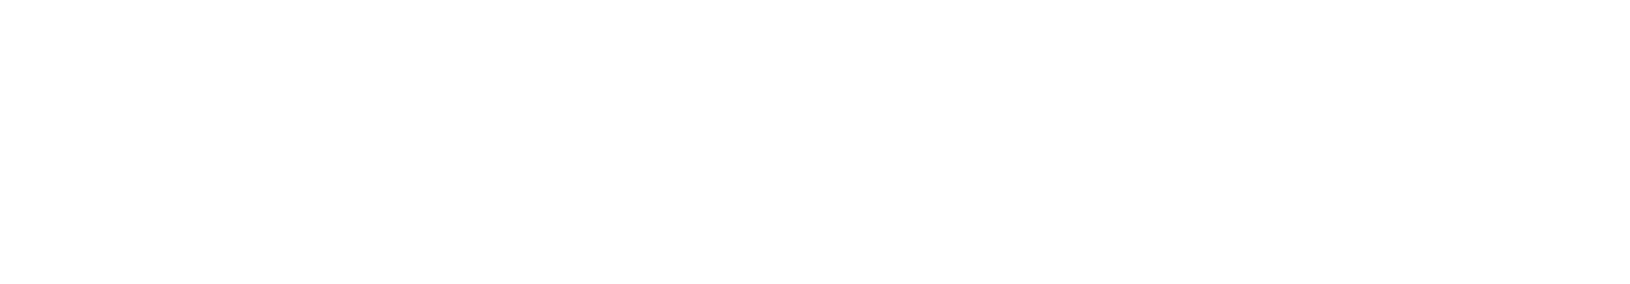 Royal Caribbean Information Collection Logo